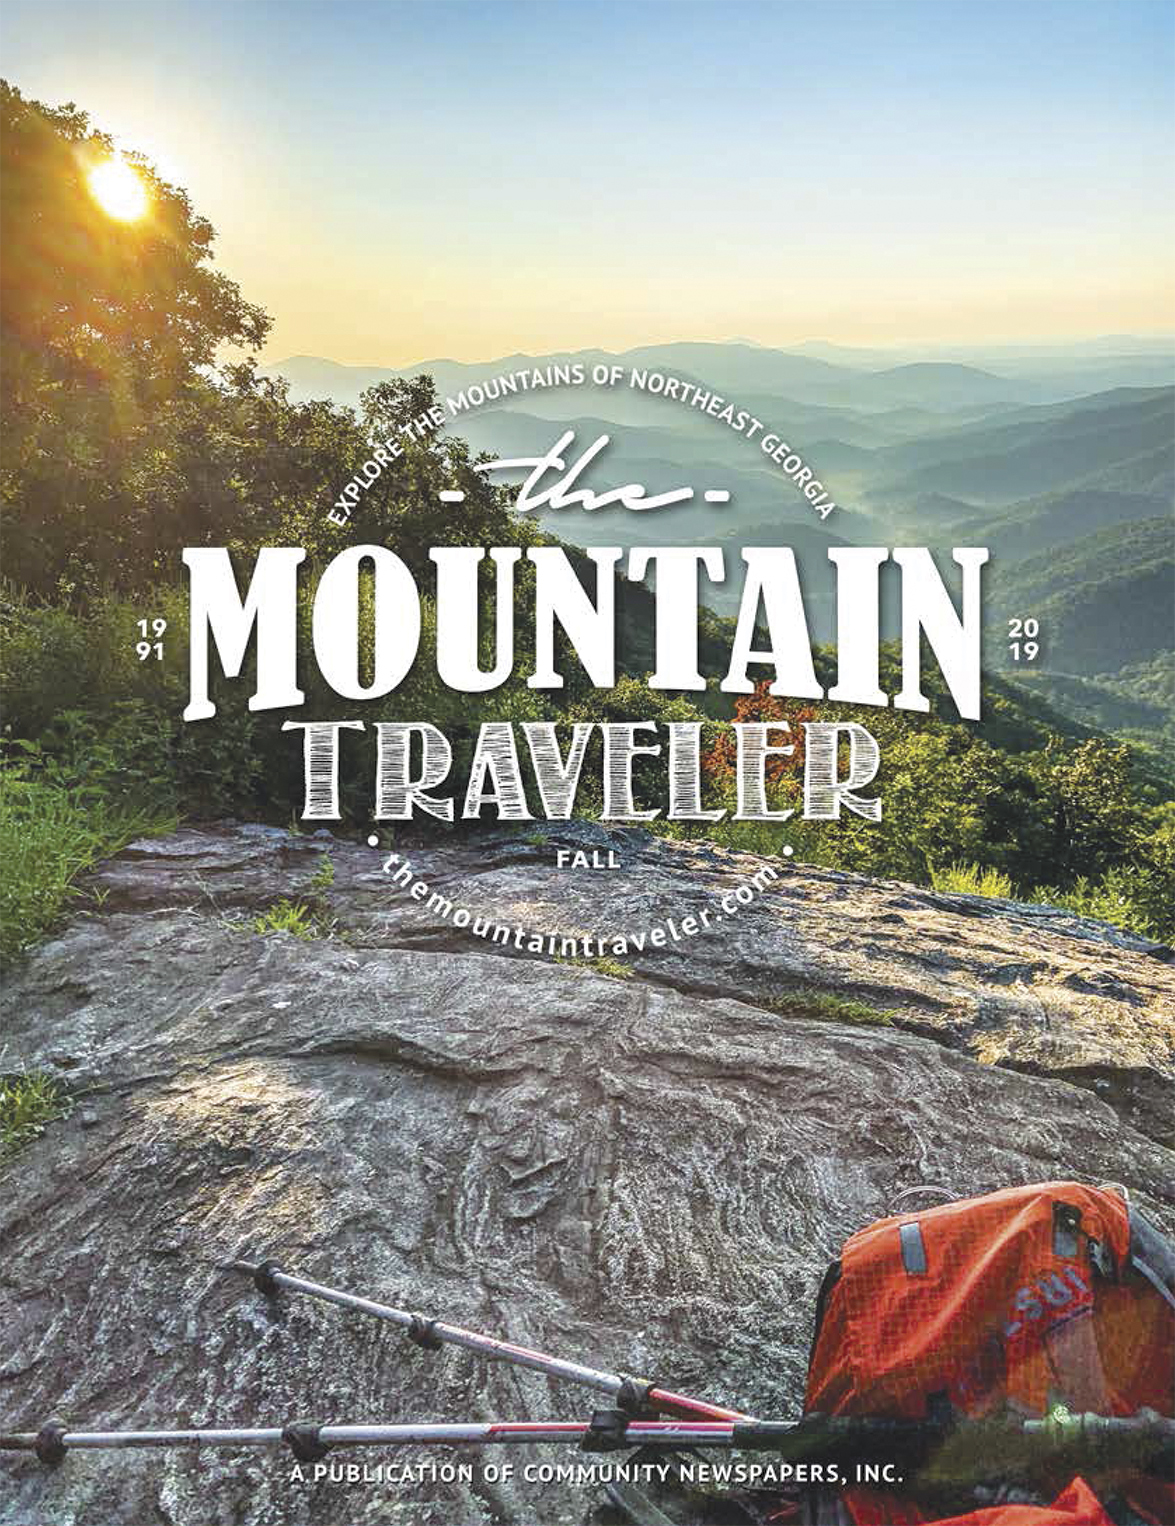 Fall 2019 Mountain Traveler